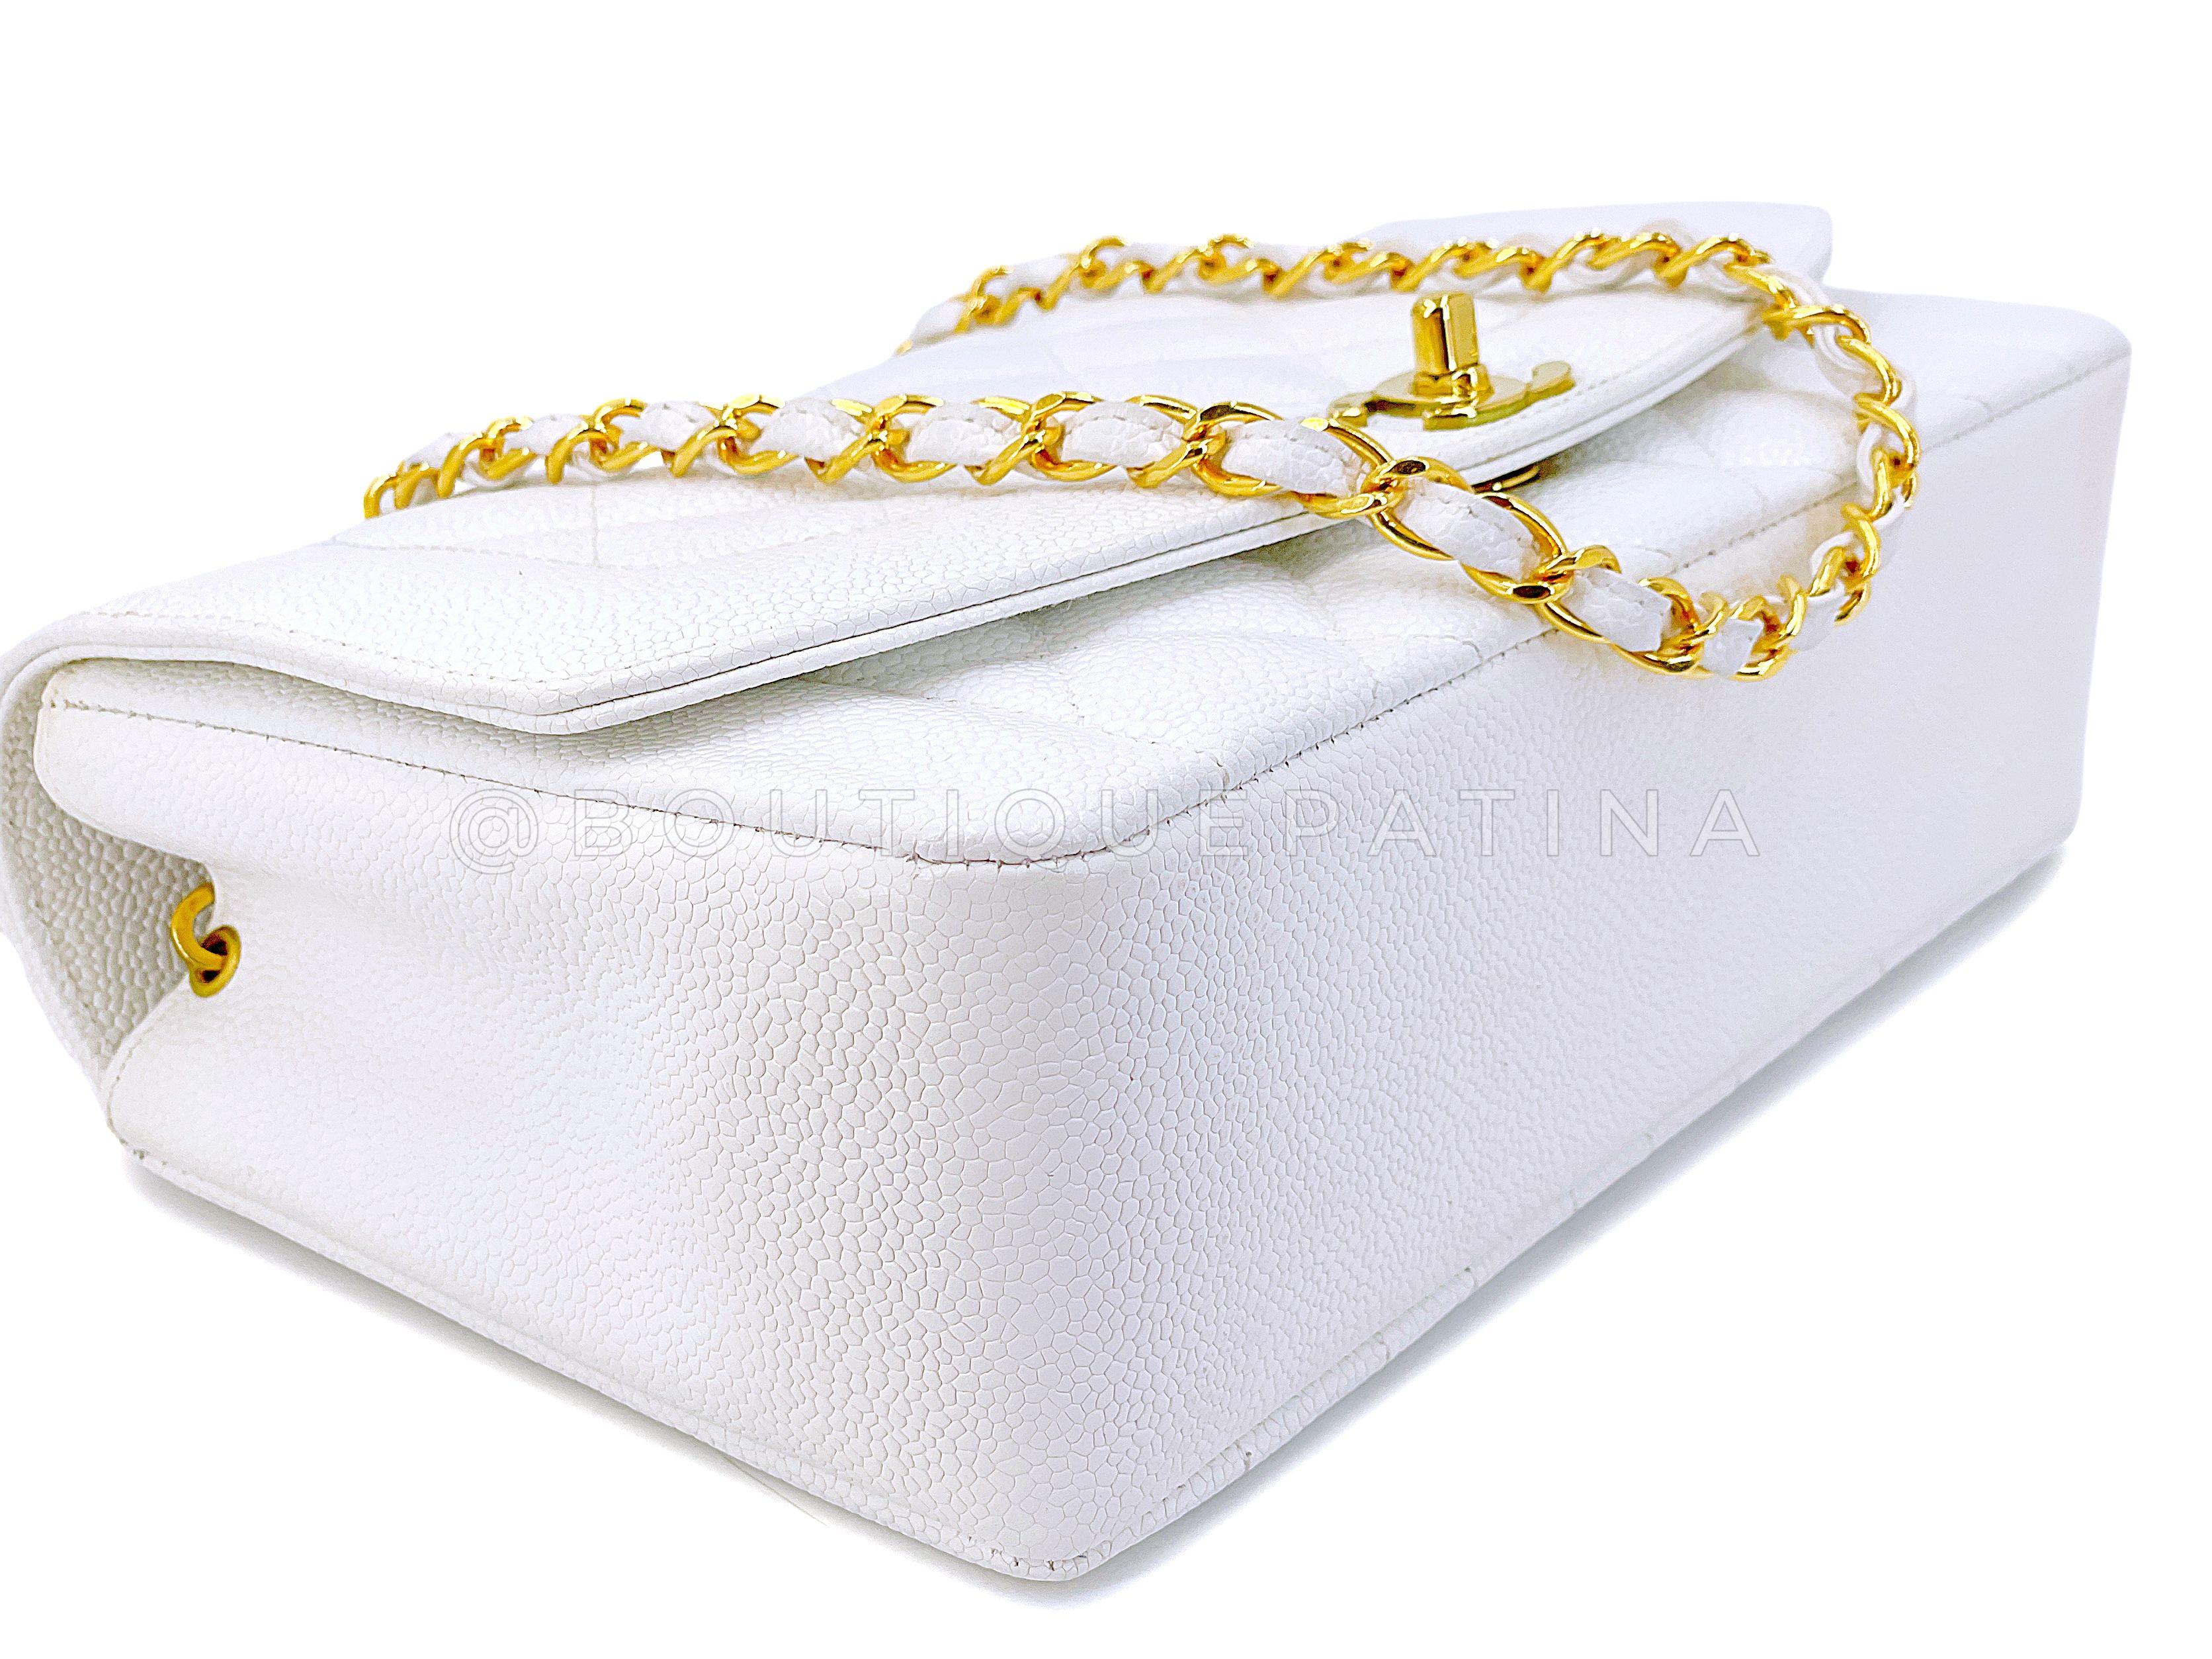 Chanel Vintage 1994 White Caviar Medium Diana Flap Bag 24k GHW 67764 For Sale 3